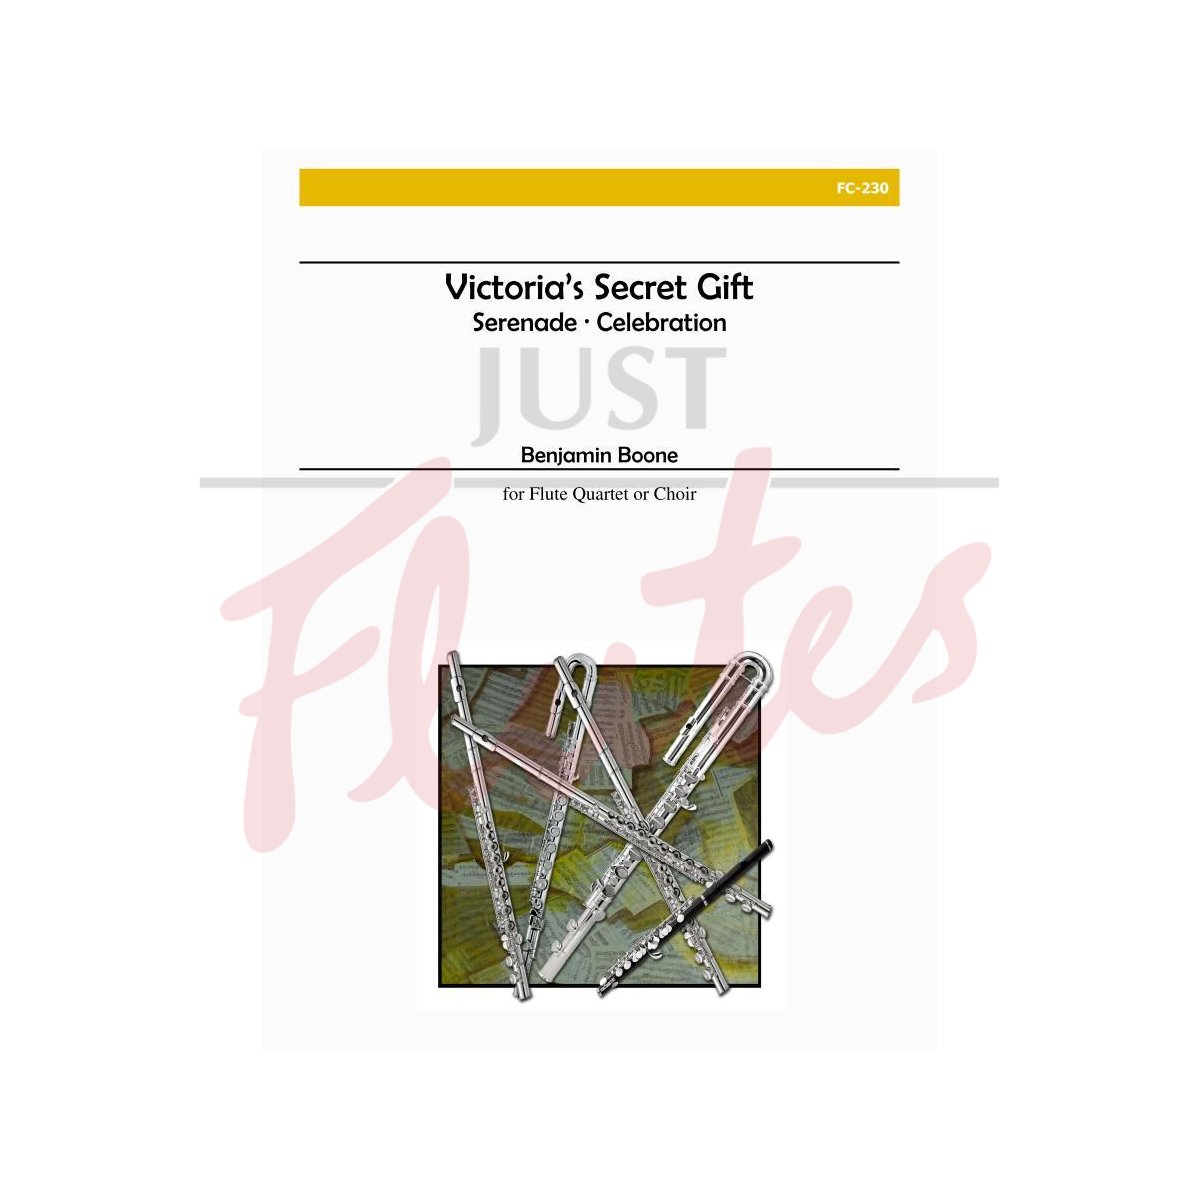 Victoria's Secret Gift for Flute Quartet or Flute Choir